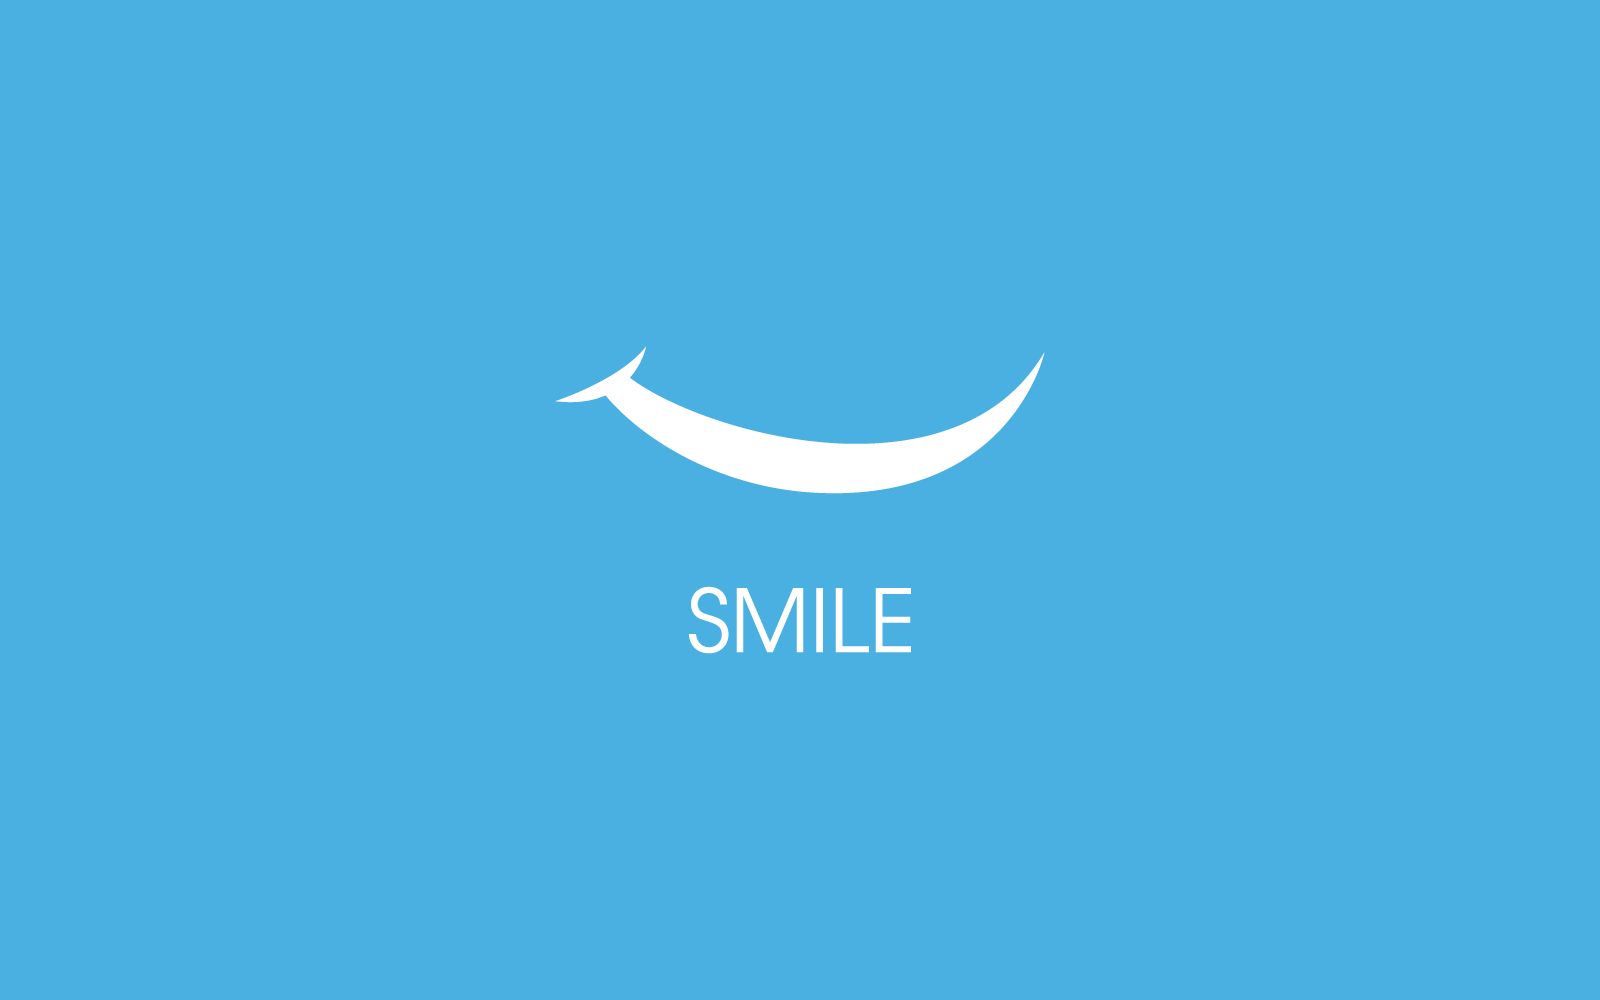 Smile happy face emoticon vector design illustration template